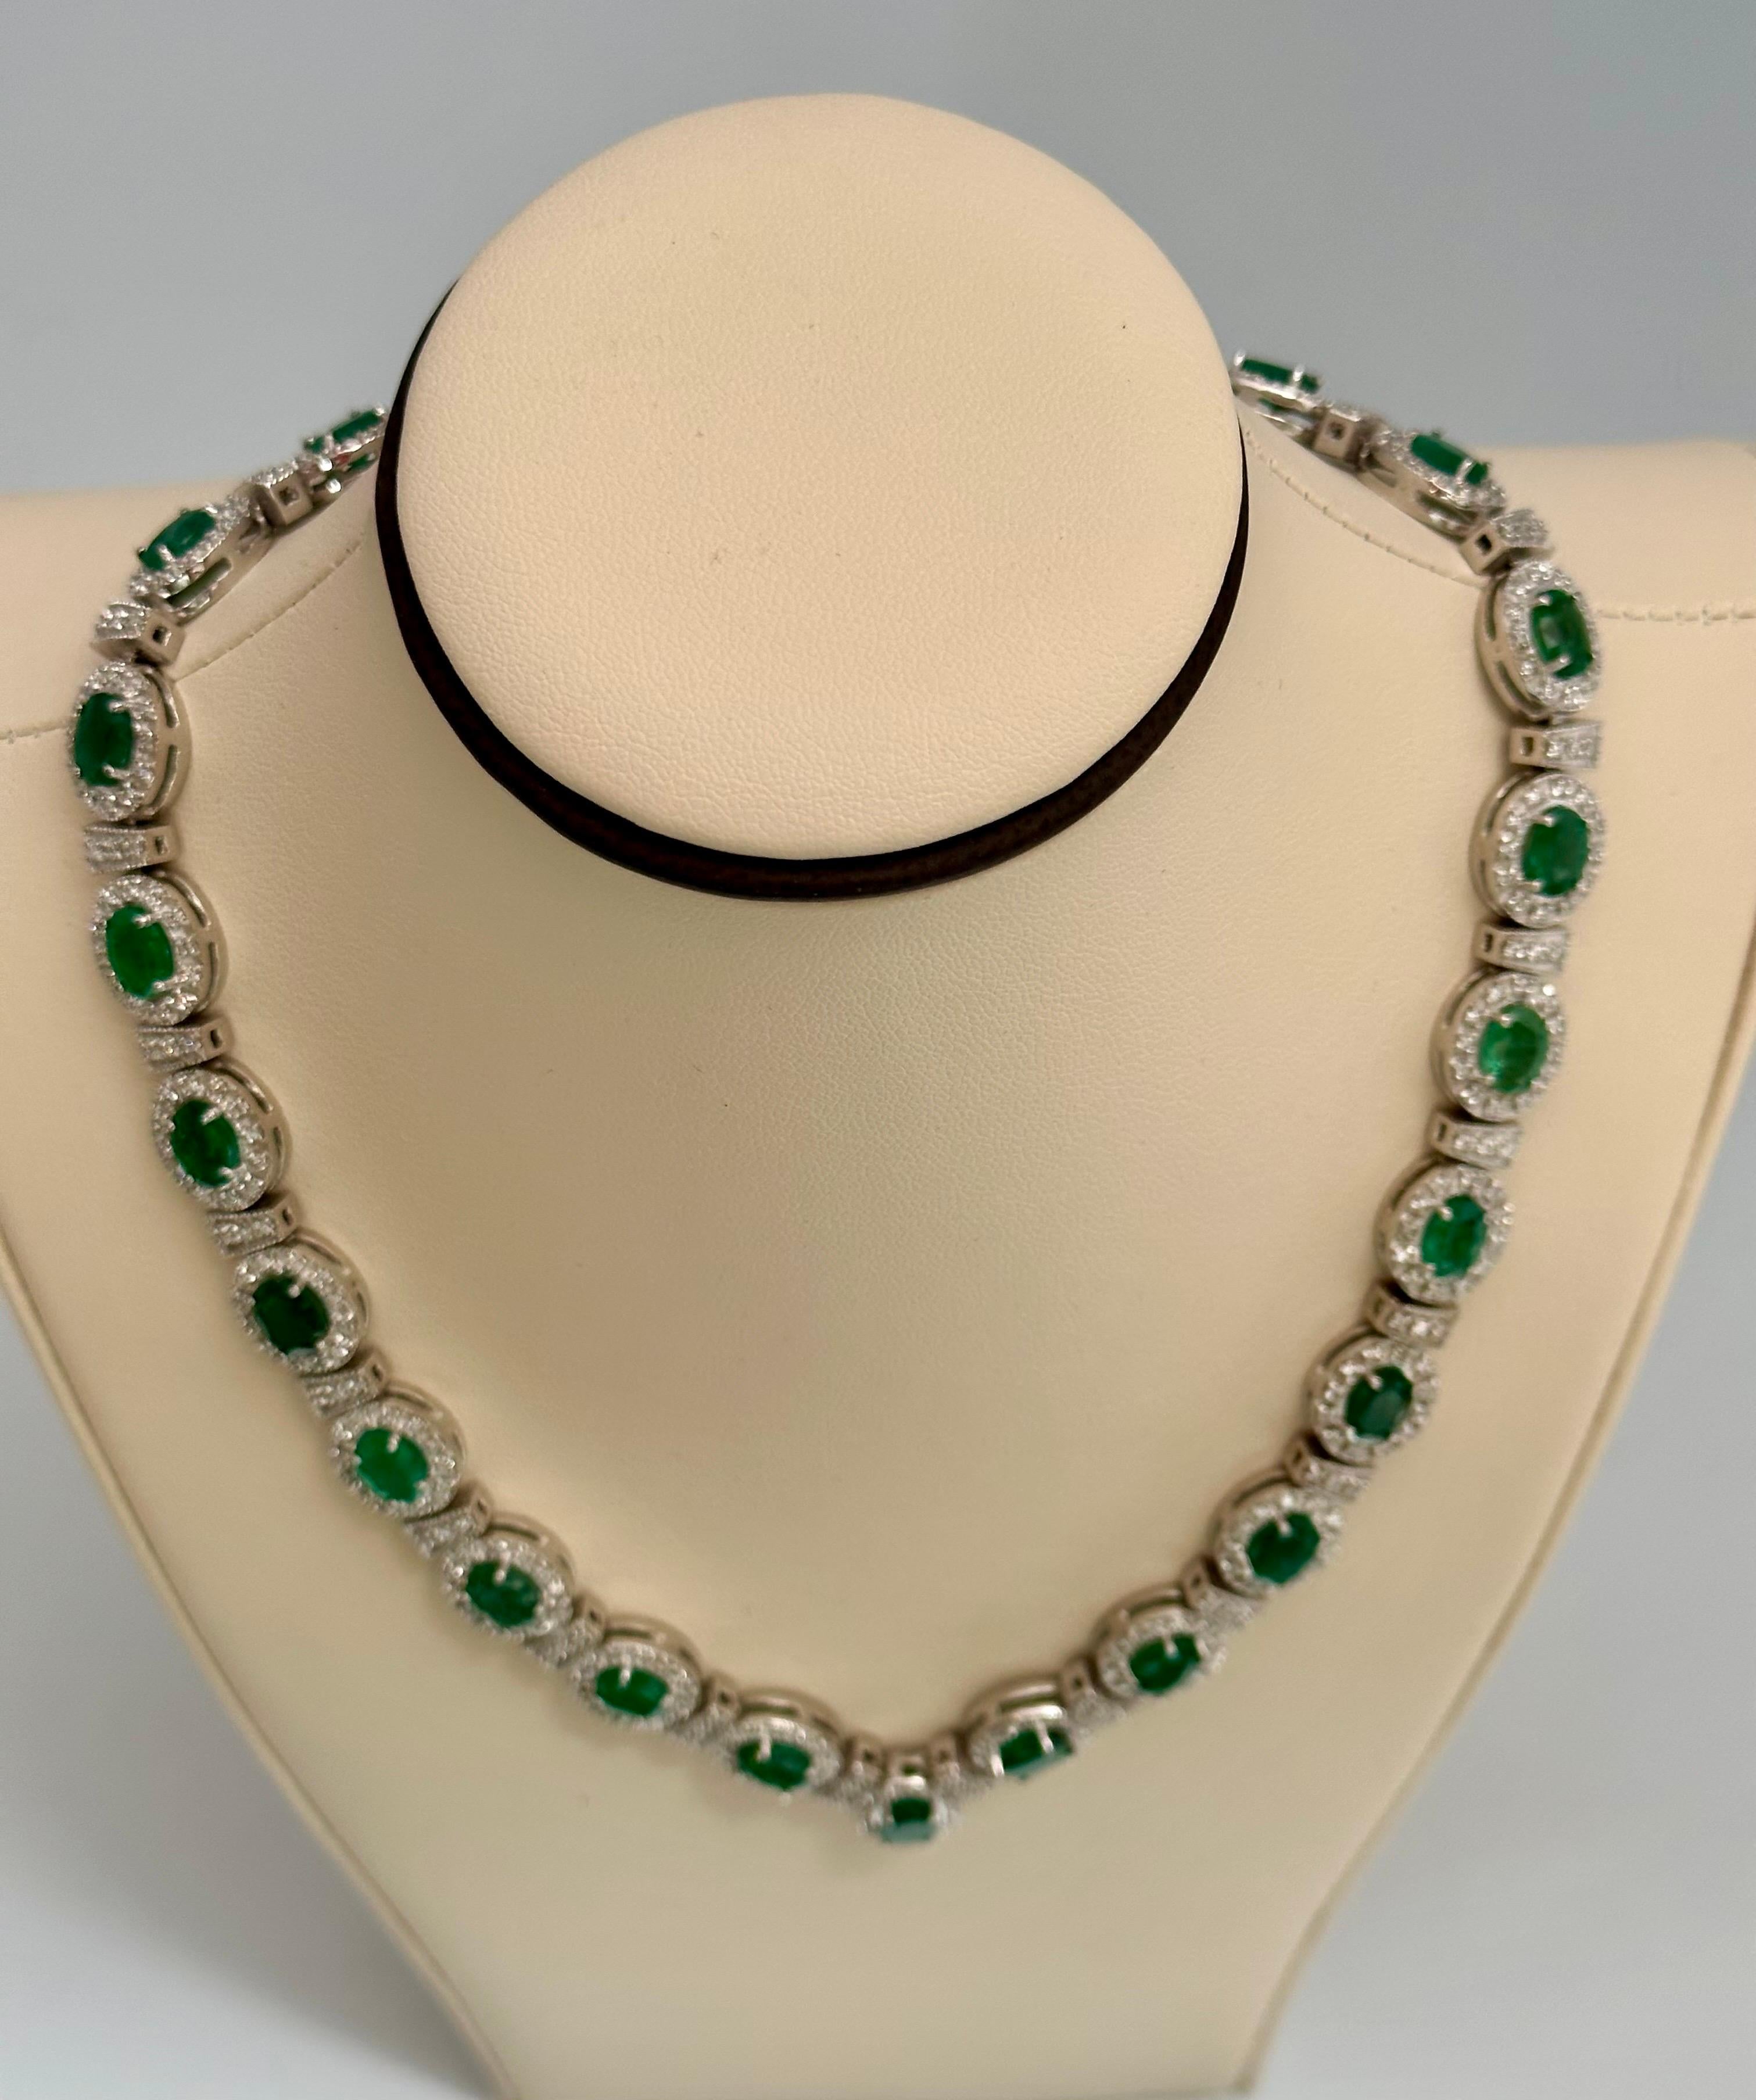 28 Carat Oval Shape Natural Emerald & 5 Carat Diamond Necklace in 14 Karat Gold For Sale 5